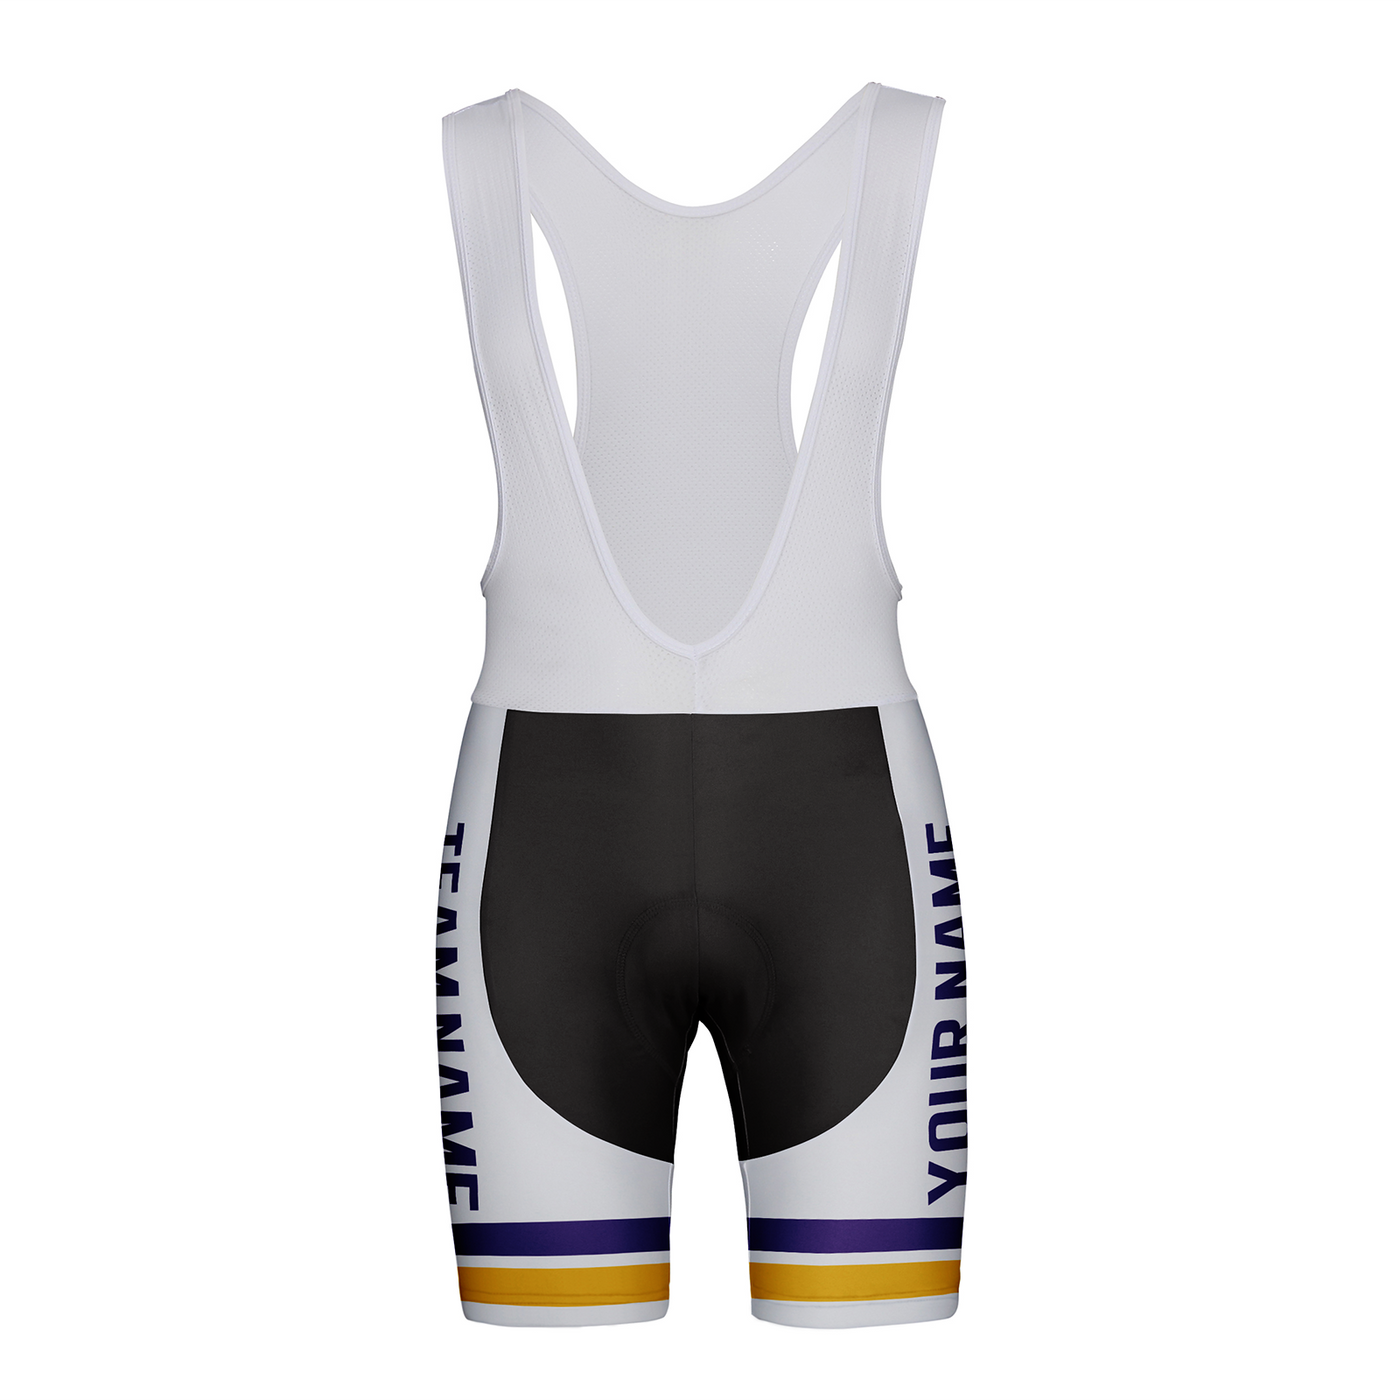 Customized Minnesota Team Unisex Cycling Bib Shorts